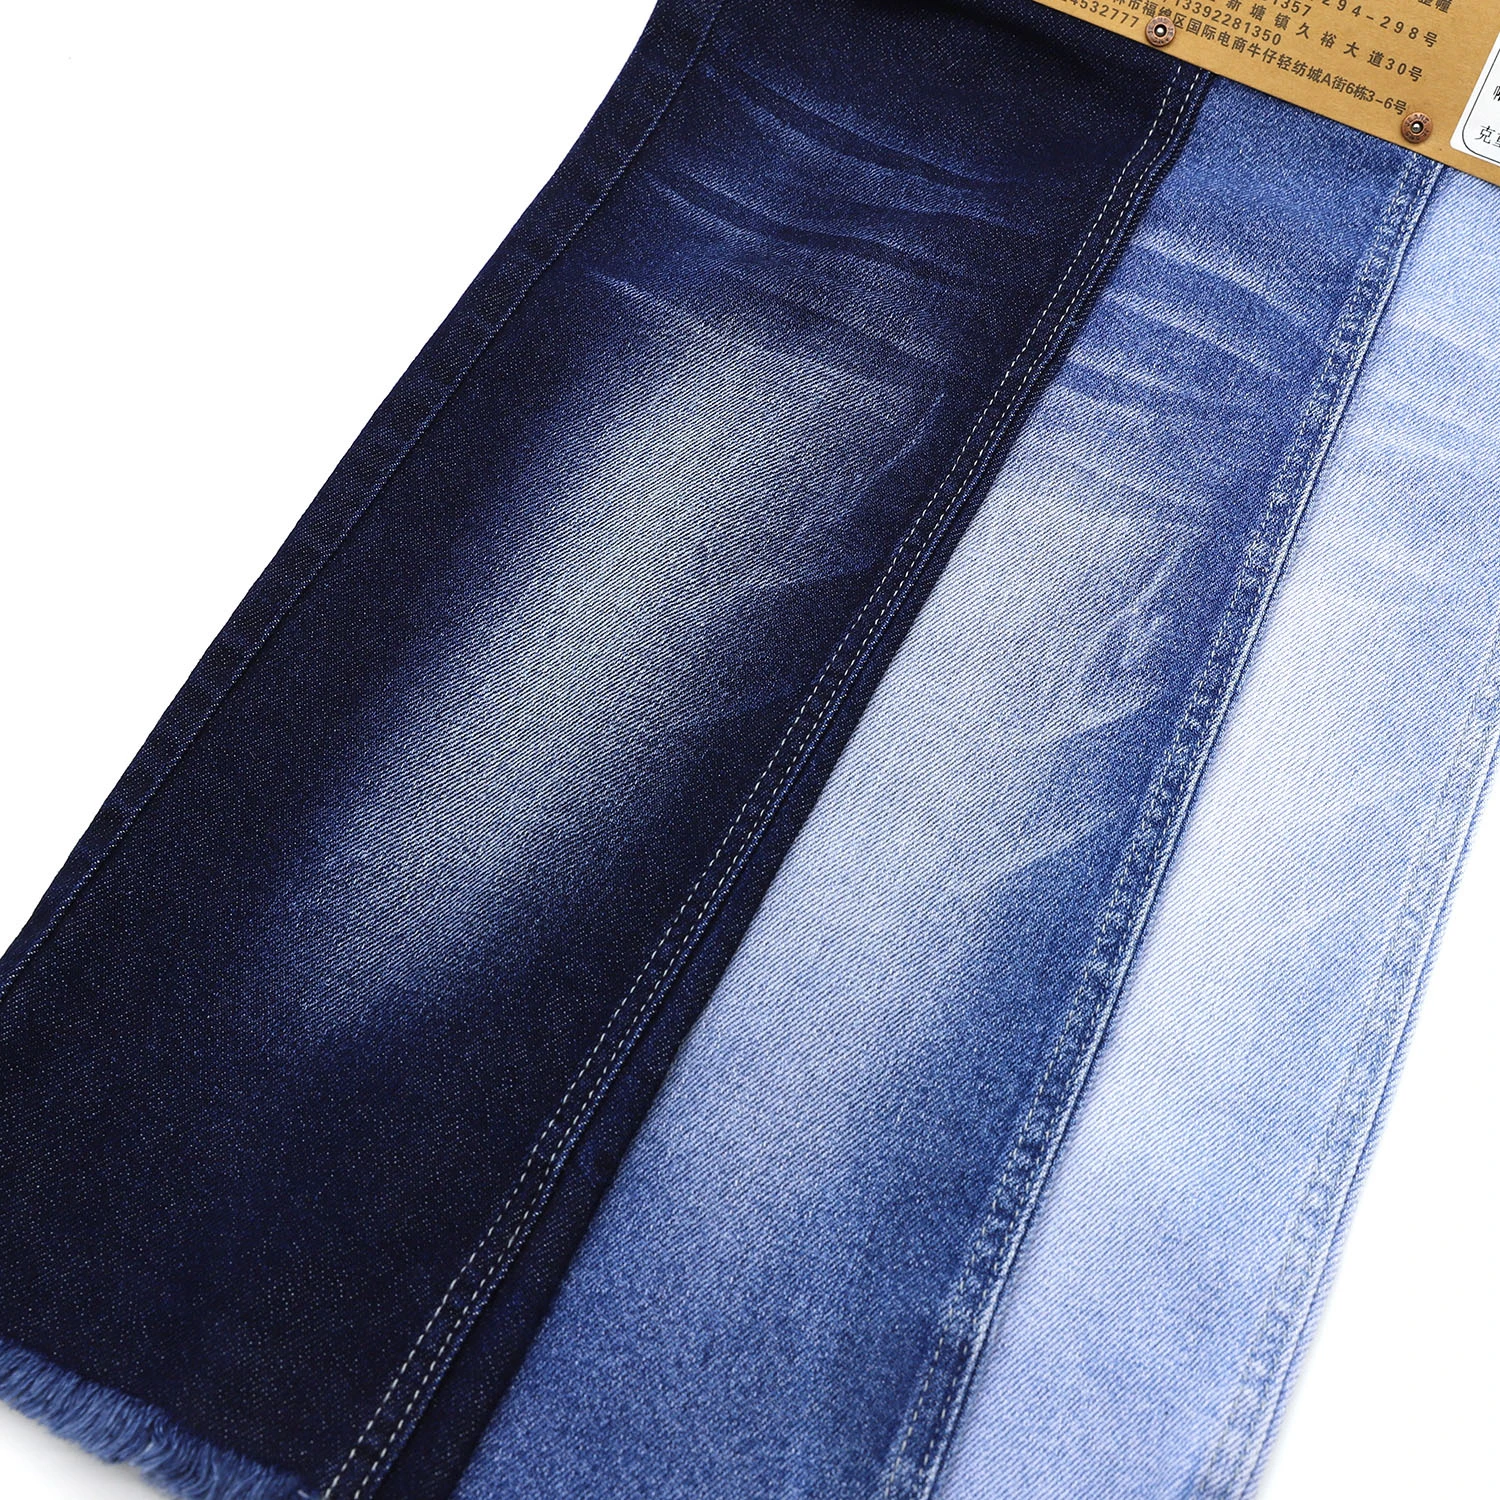 T120A-1 sky blue 10oz denim fabric stretchable with spandex 2